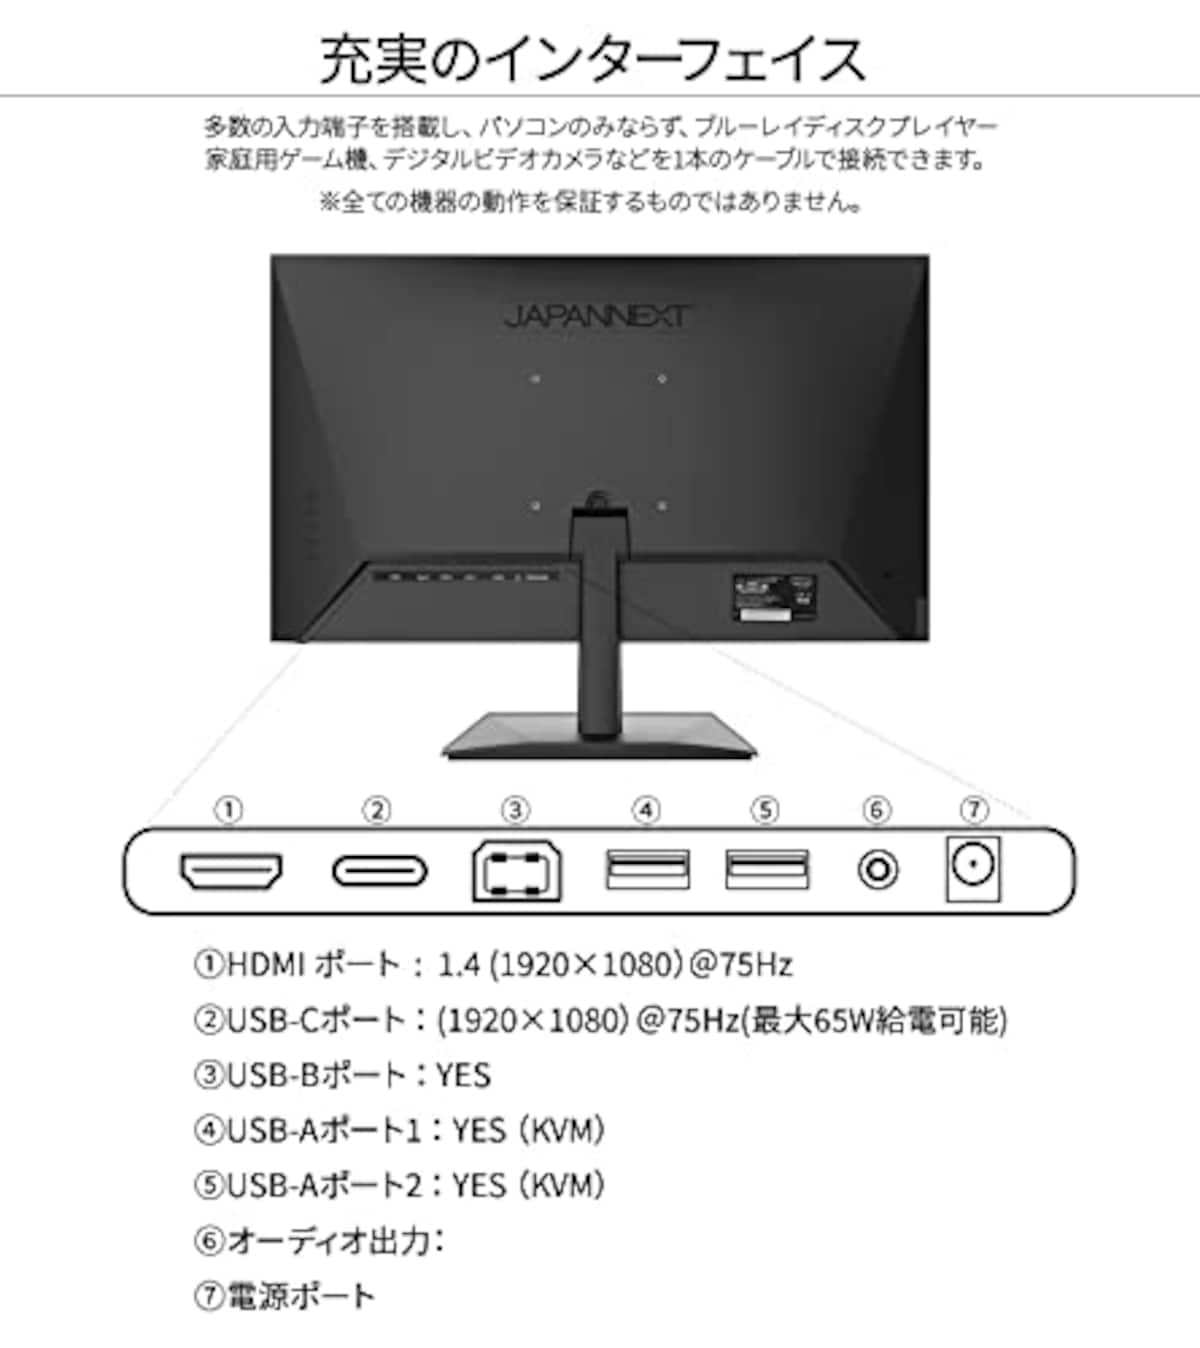  【Amazon.co.jp限定】JAPANNEXT IPSパネル搭載23.8インチ フルHD解像度(1920 x 1080) USB-C給電対応液晶モニターJN-IPS238FHDR-C65W HDMI USB-C(65W給電) KVM機能画像6 